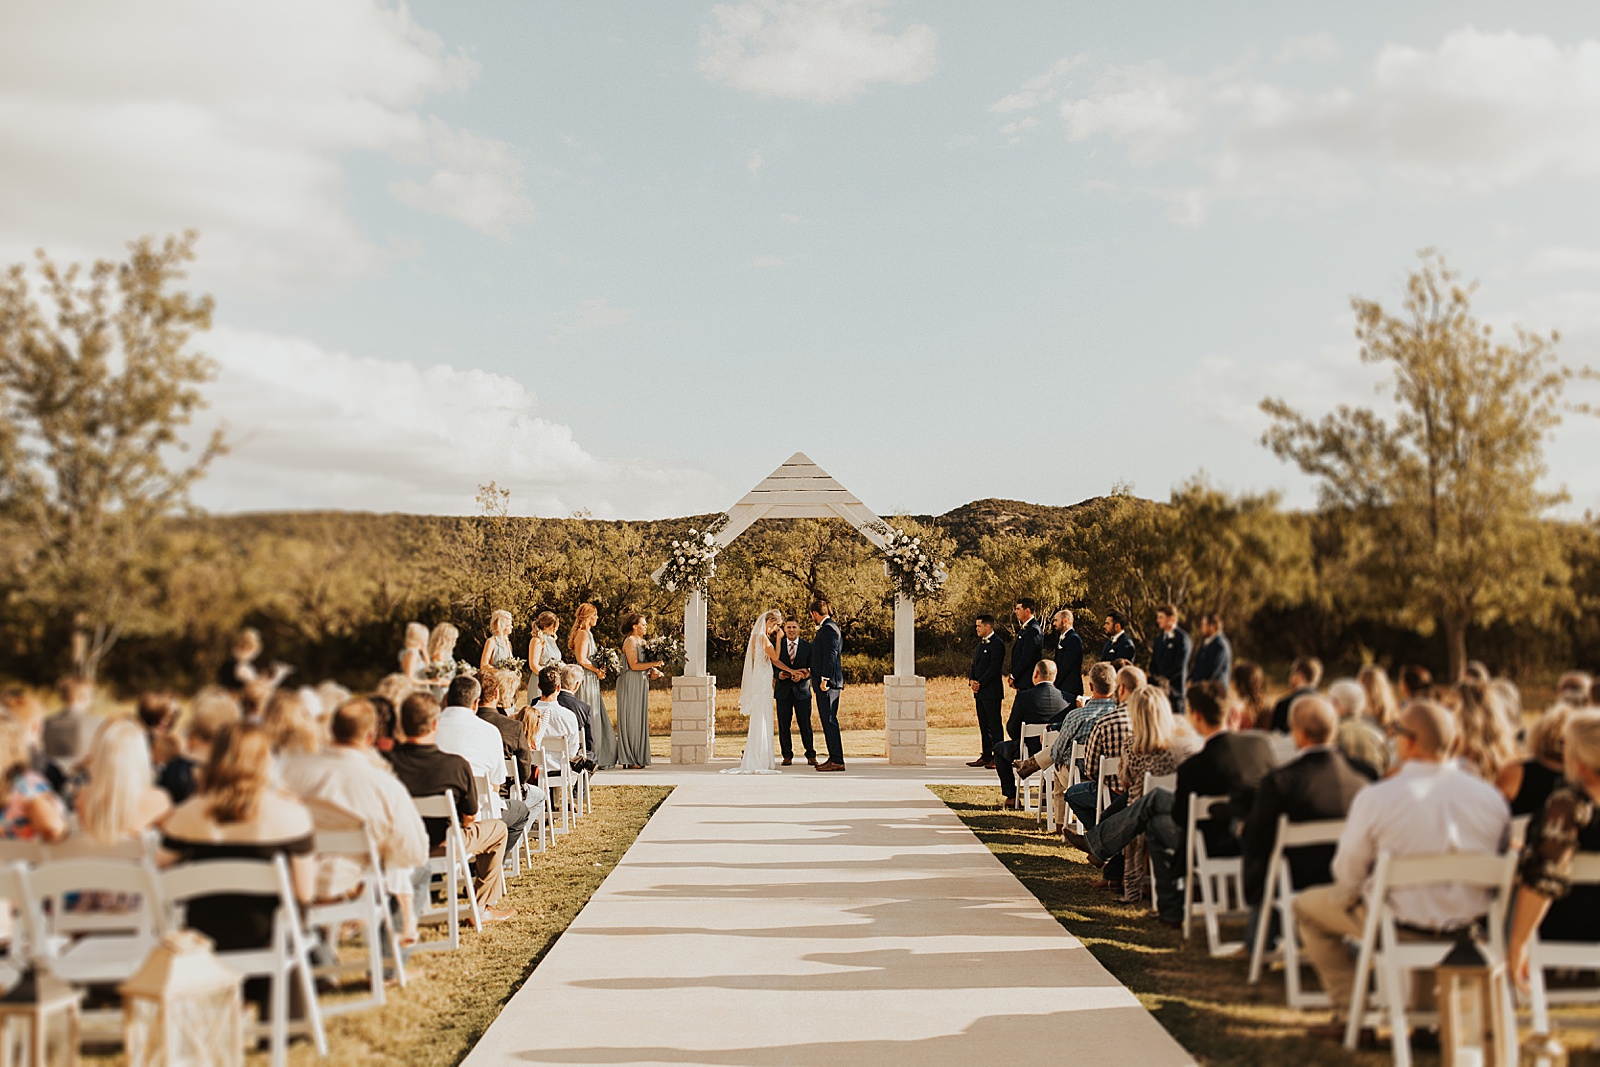 Beautiful ceremony photo at Sabrina Cedars Wedding Venue in Abilene, TX.